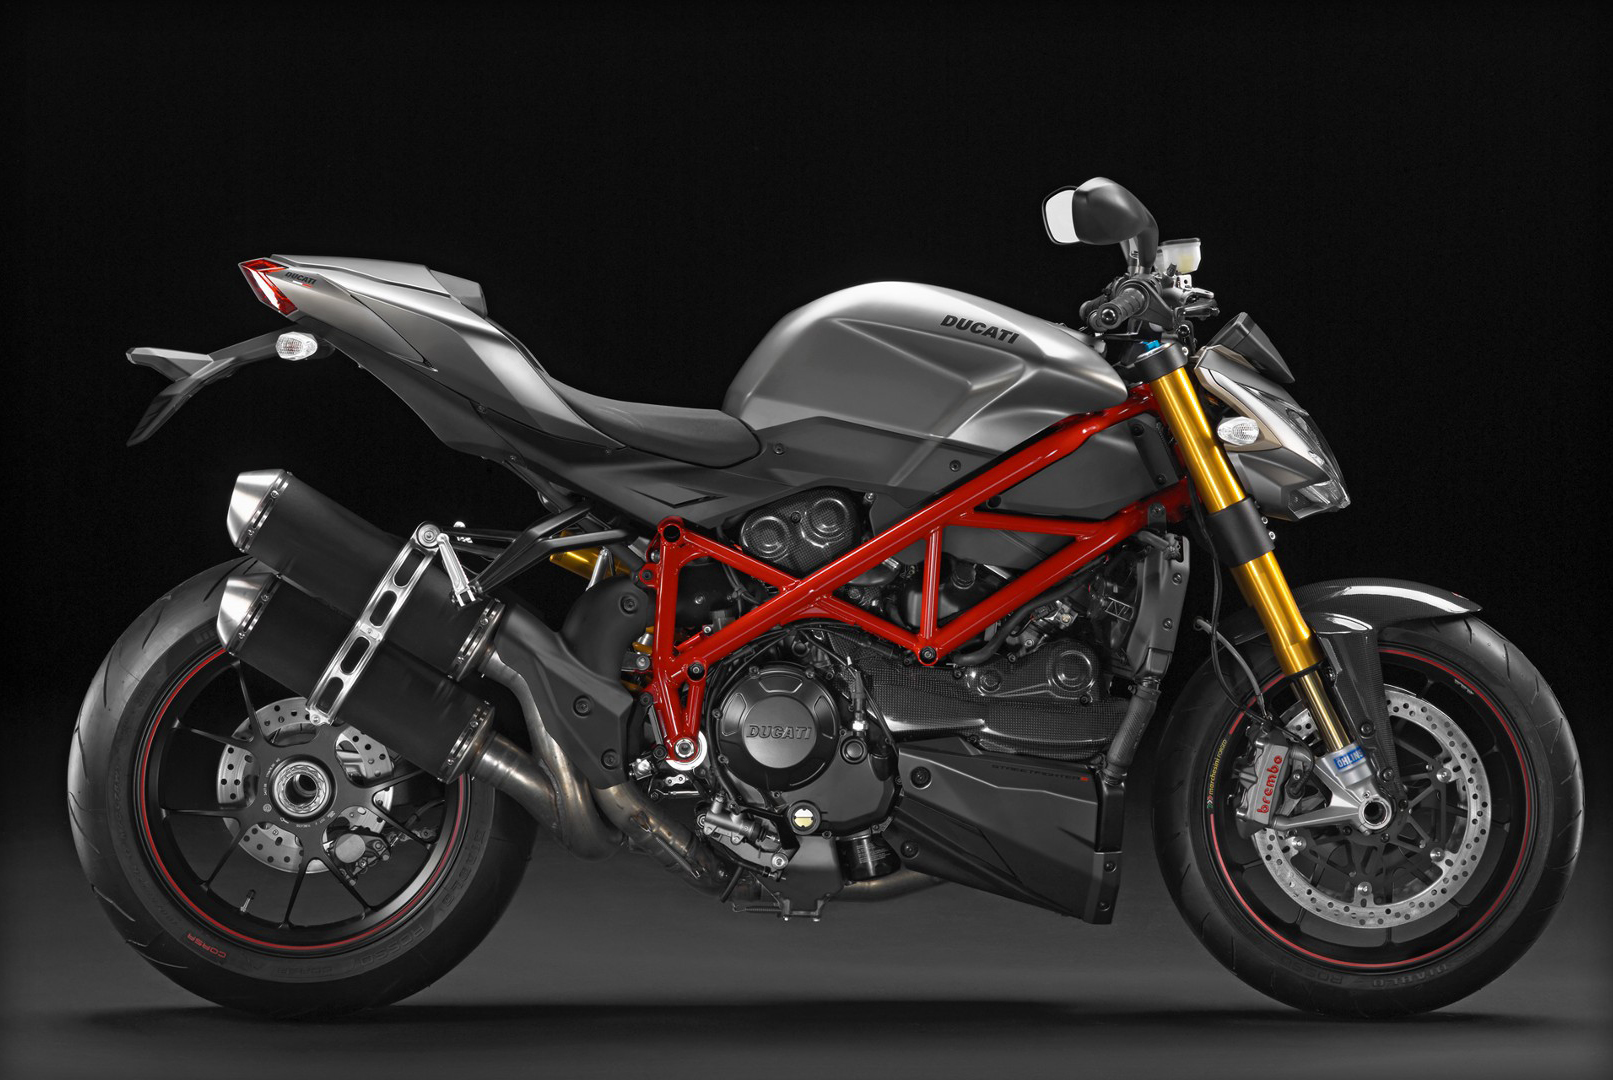 Ducati Streetfighter S 2013 The Real Streetfighter Ever Merdekacom